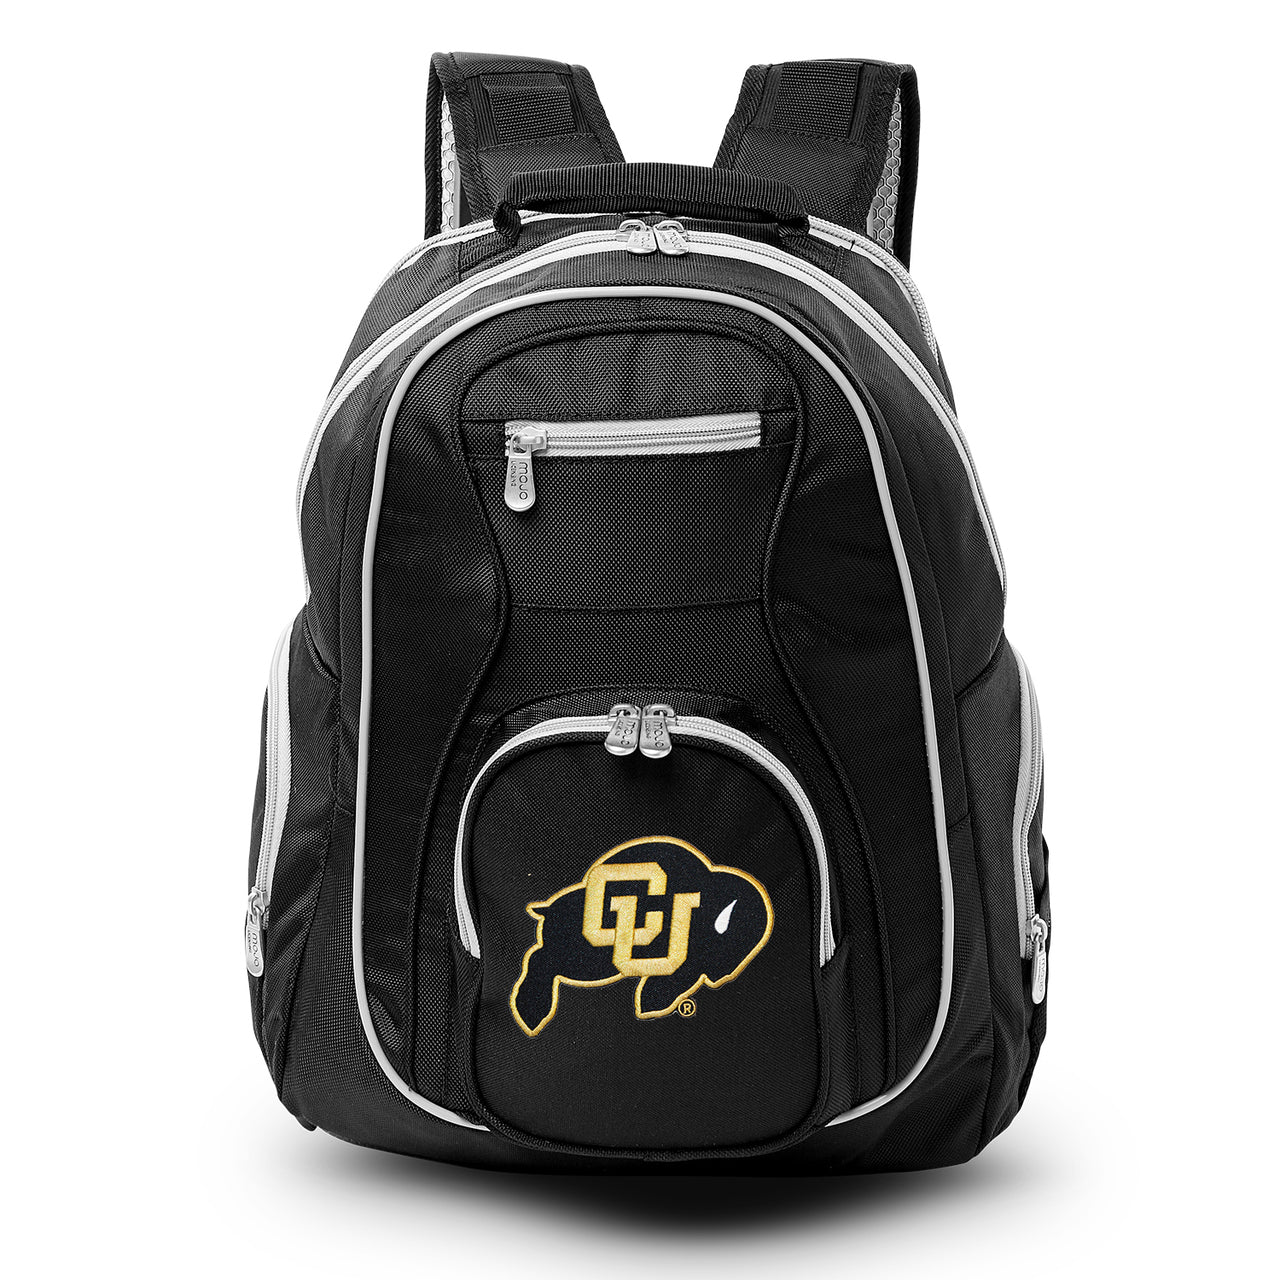 Colorado Buffaloes Laptop Backpack